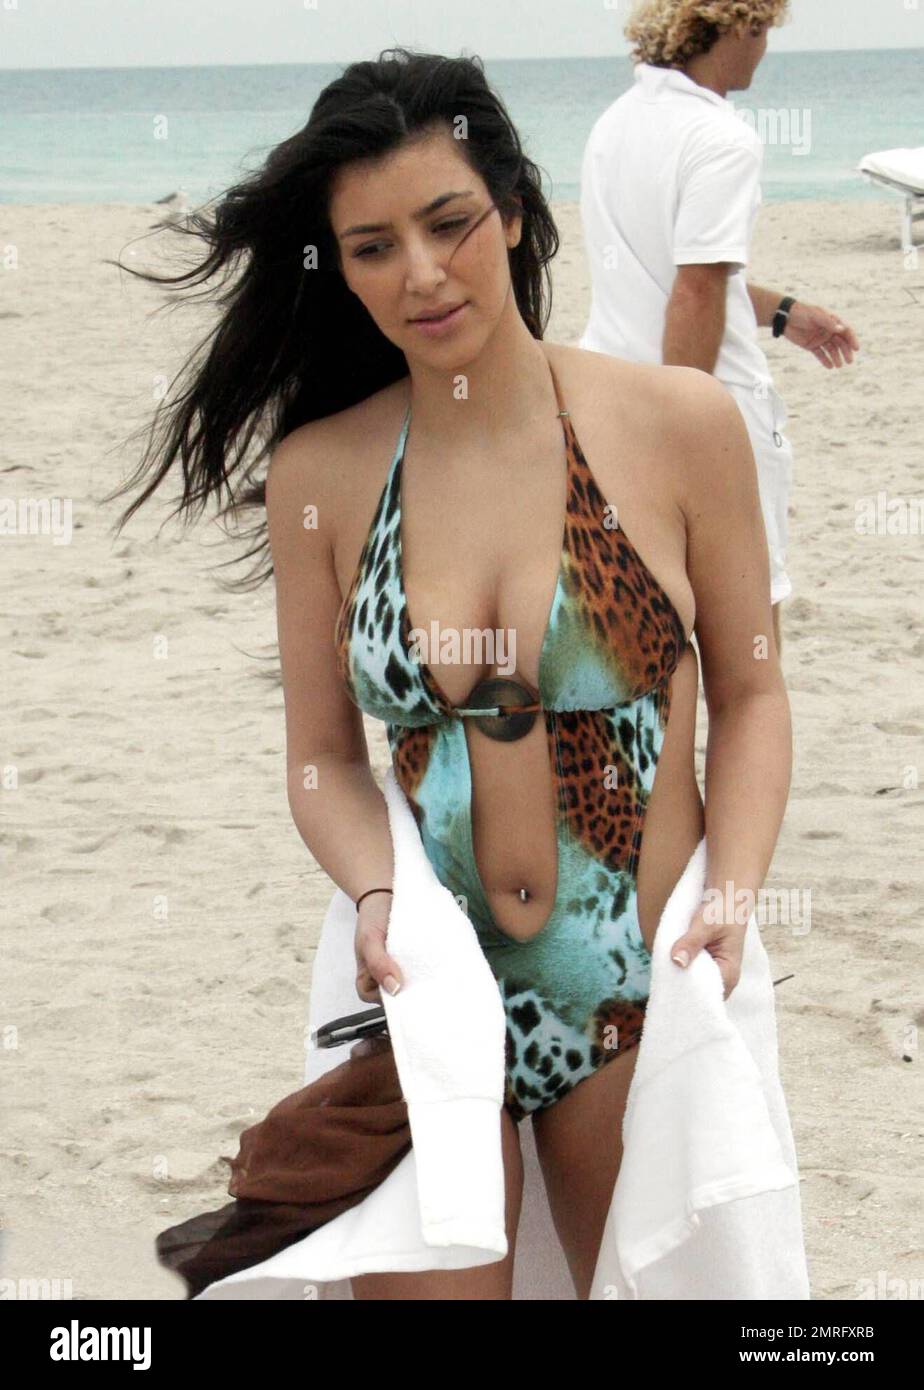 Kim Kardashian's Bikini Pics: See Her Best Swimsuit Looks